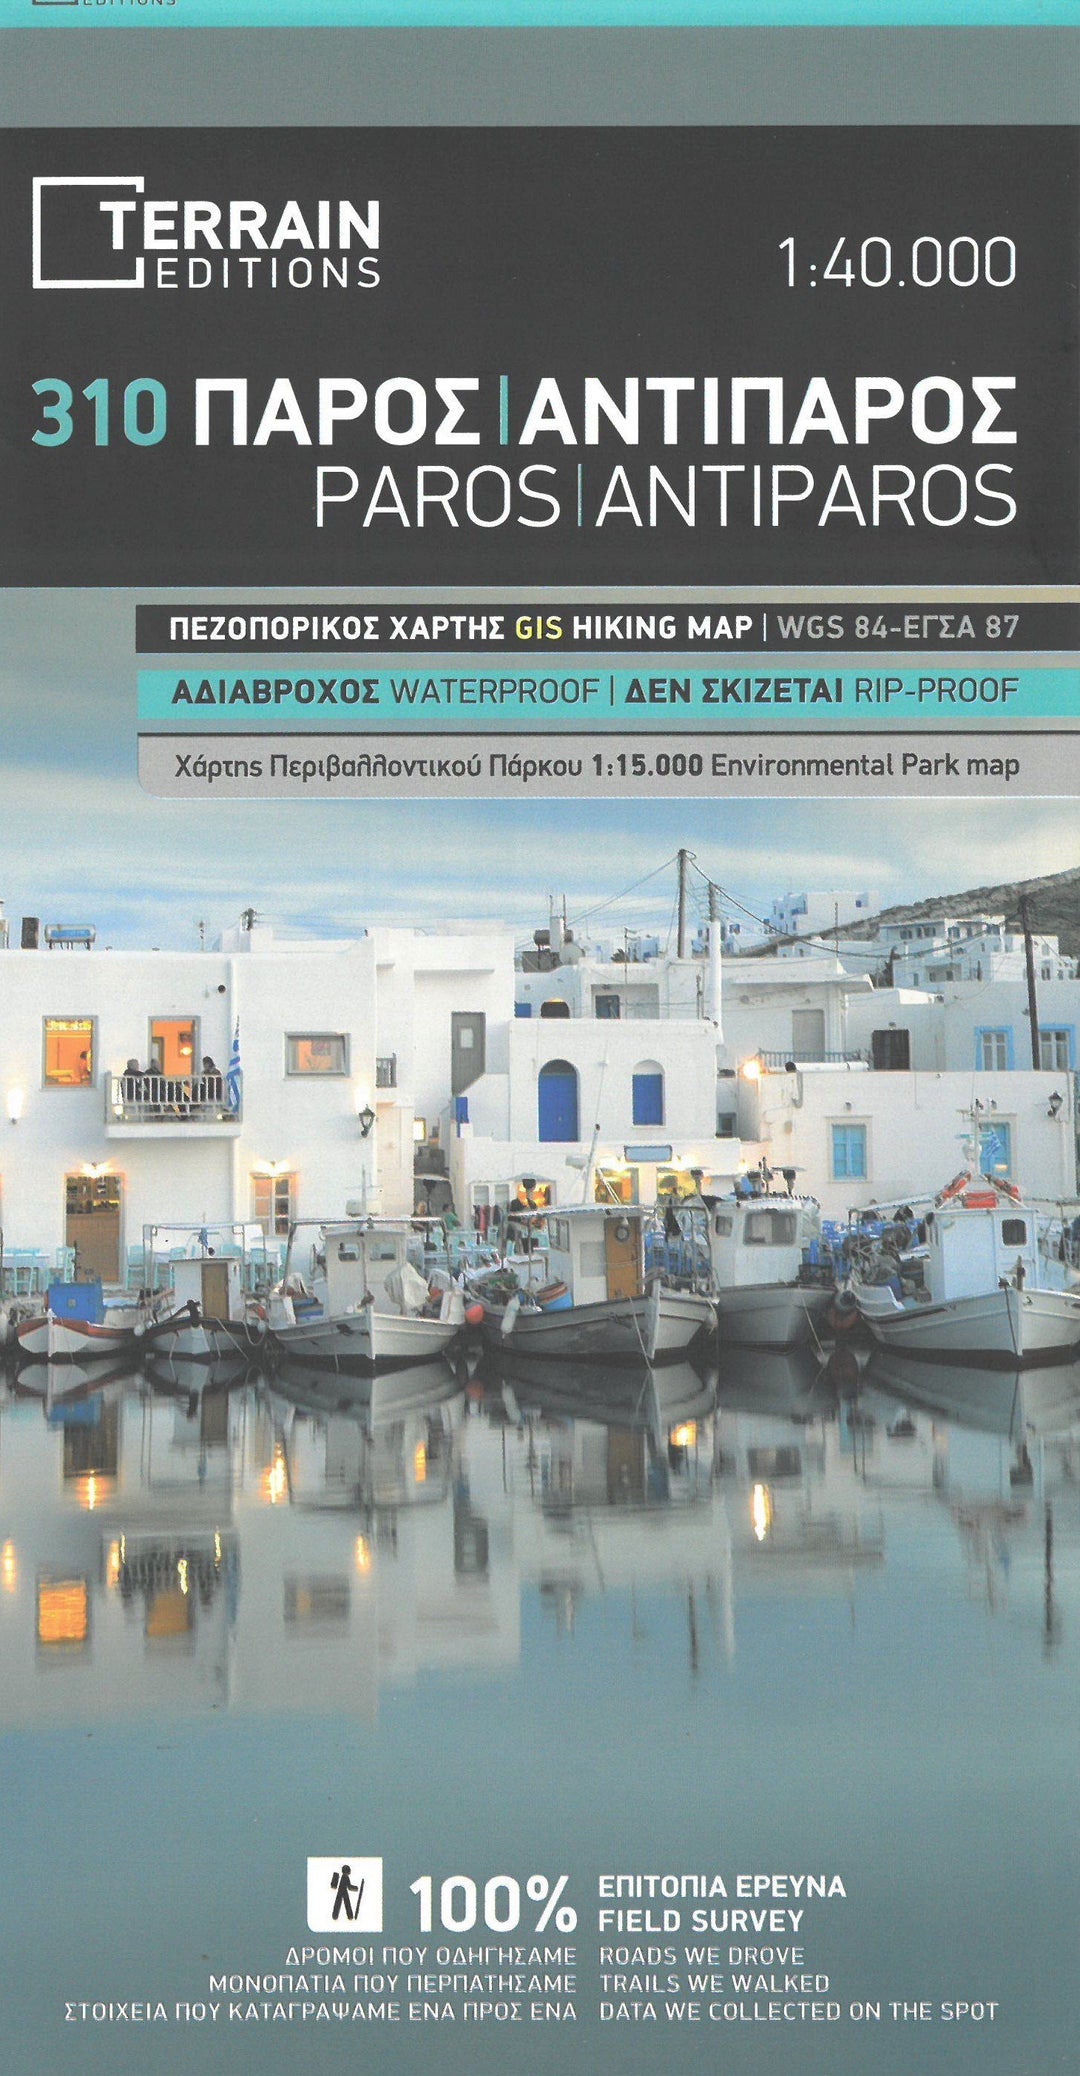 Carte de randonnée - Ile de Paros et Antiparos (Grèce), n° 310 | Terrain Cartography carte pliée Terrain Cartography 